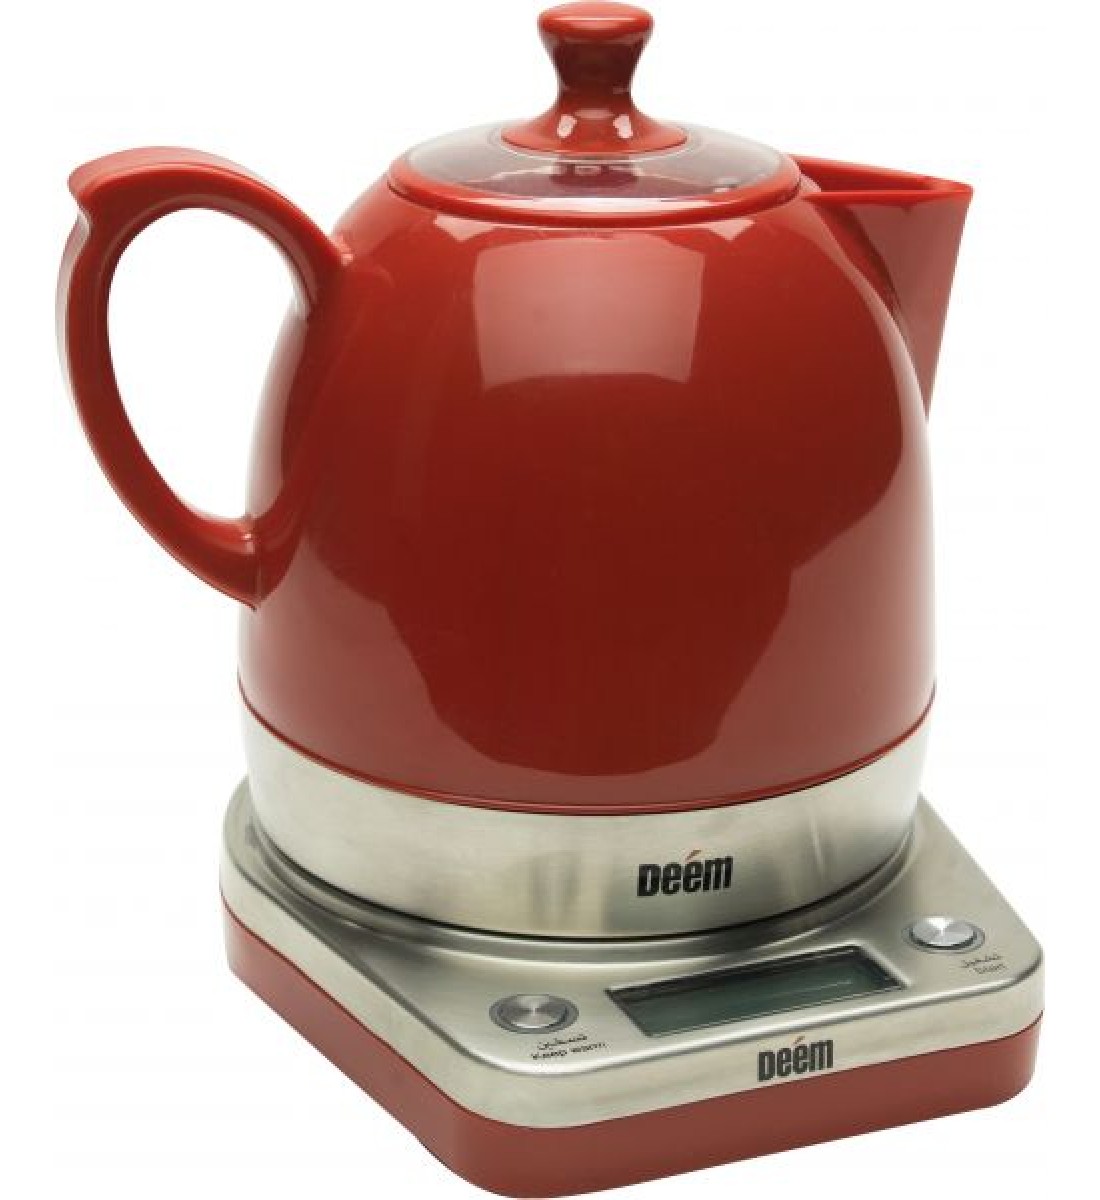 Deem Karak Tea Maker, 1 Liter, Red, Ad-Epkt-1012A, Ceramic Material